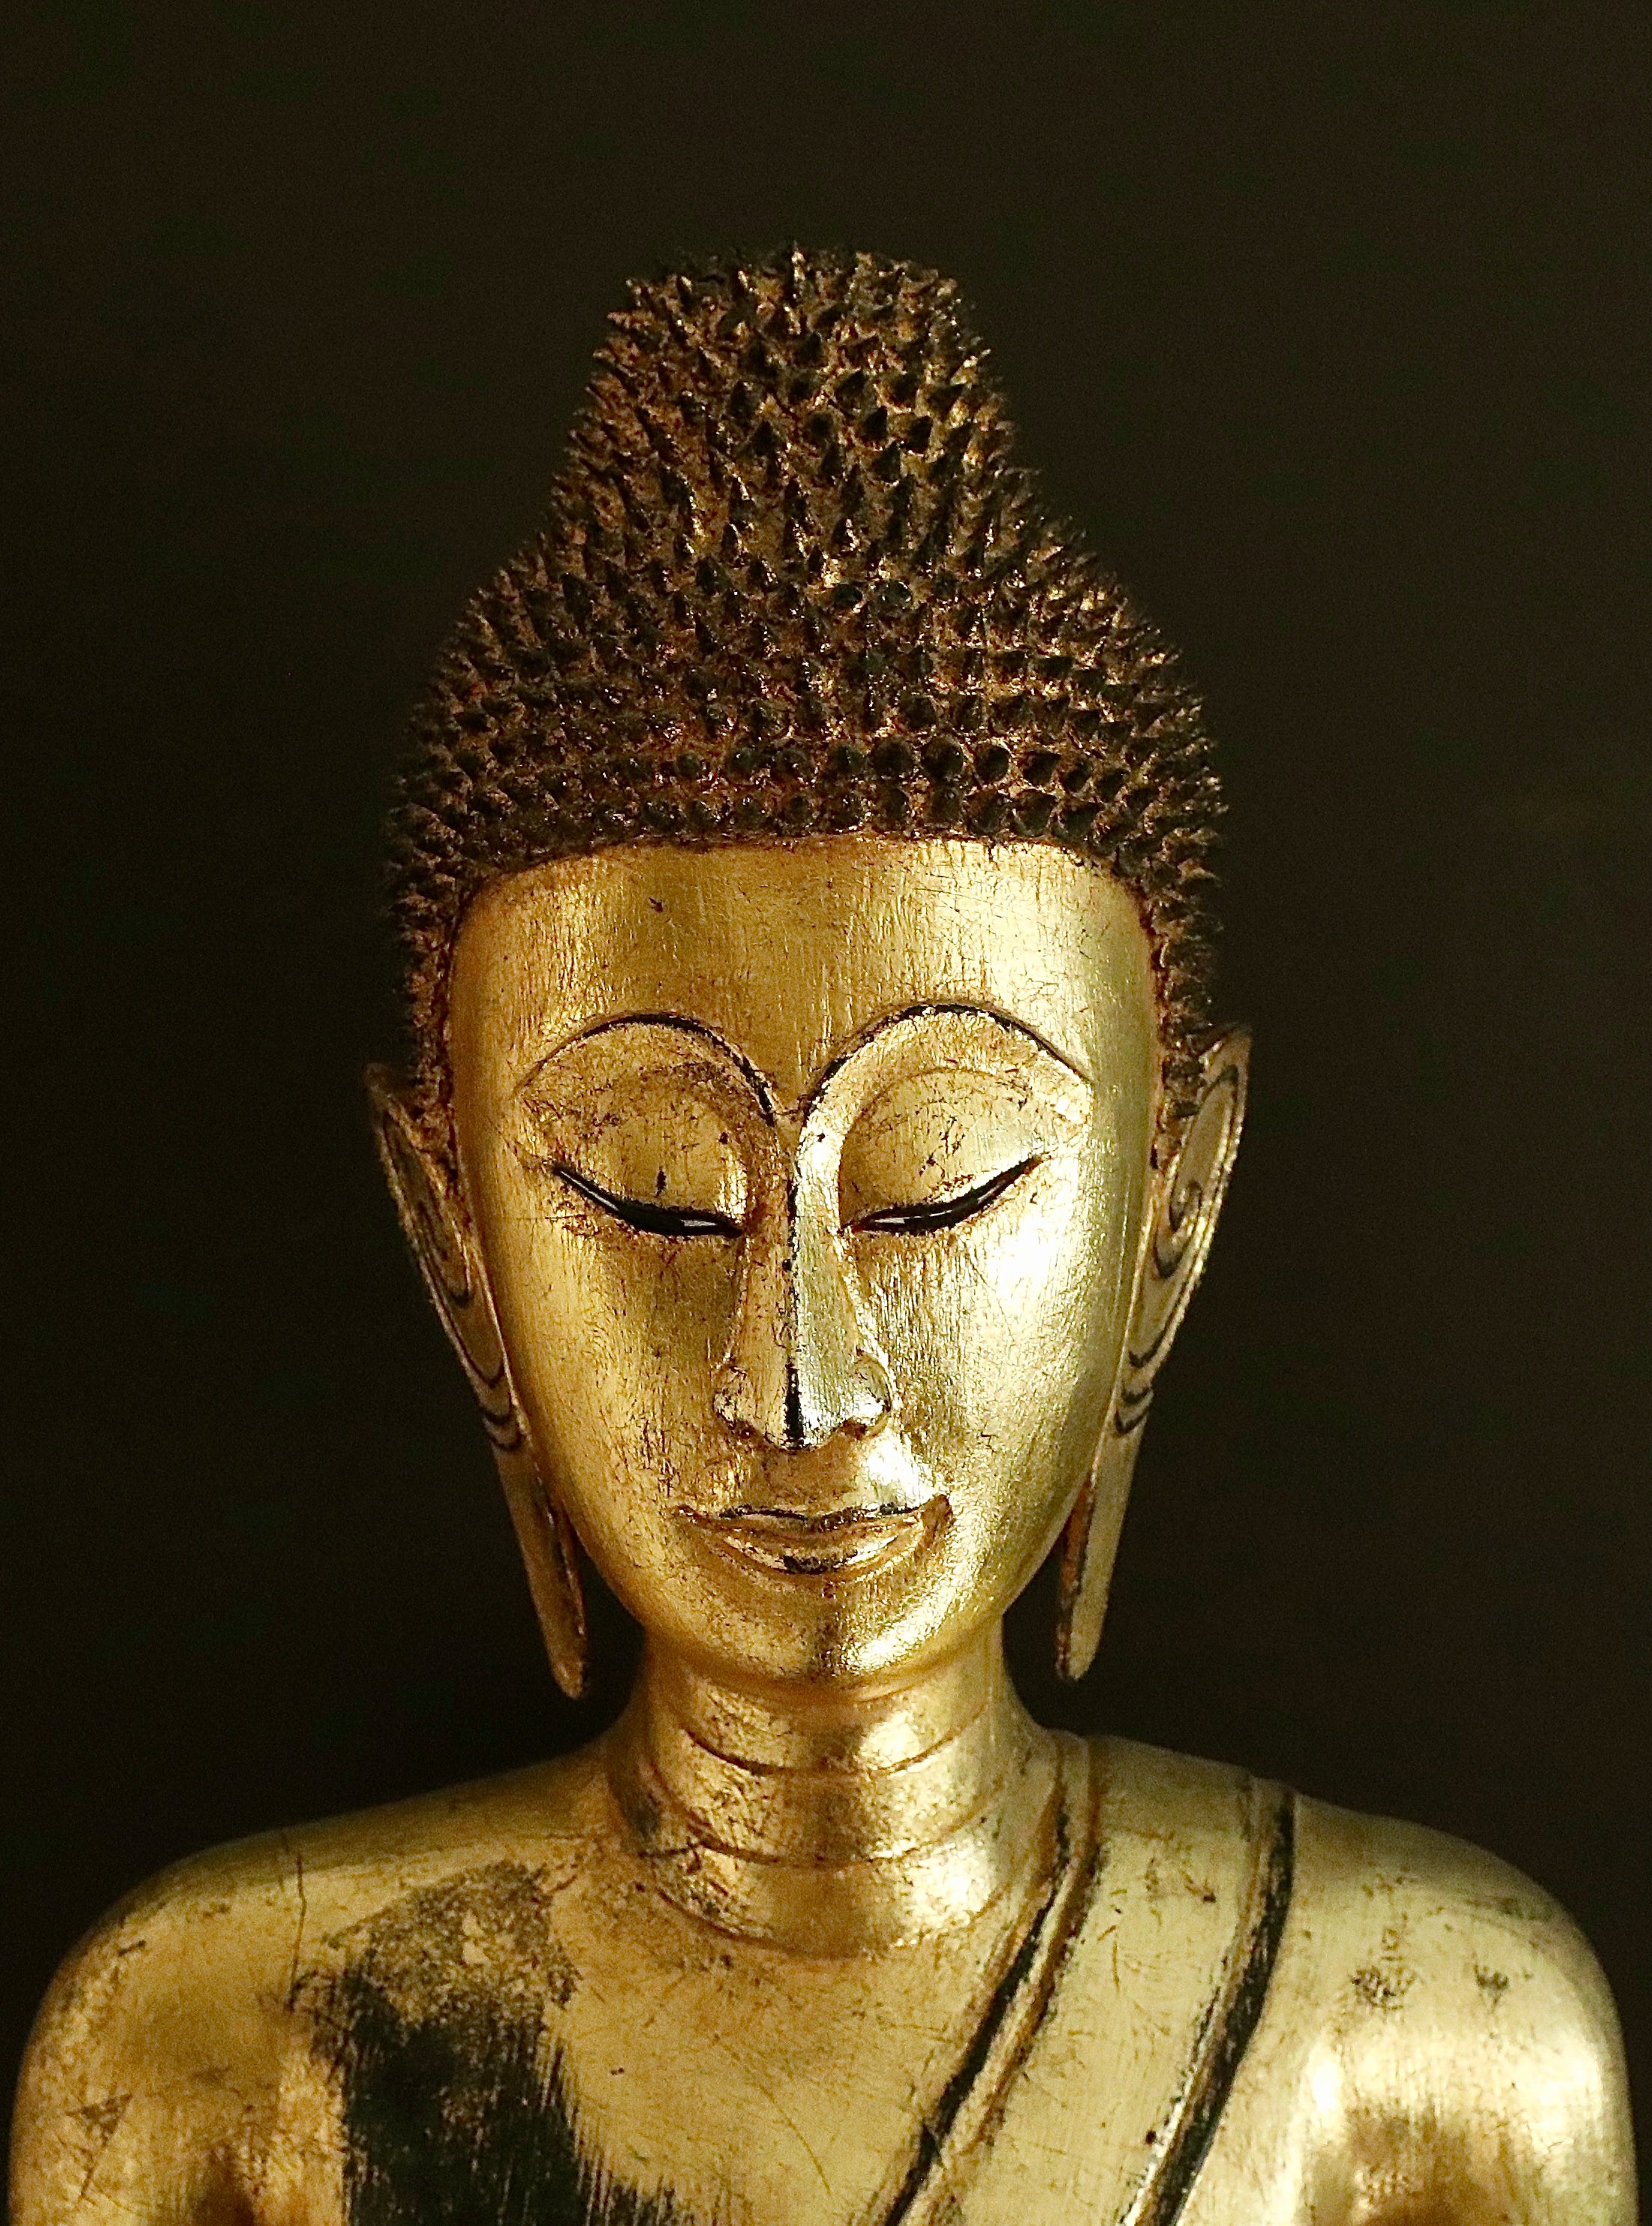 MANDALAY BUDDHA STATUE, GILDED, 161 CM